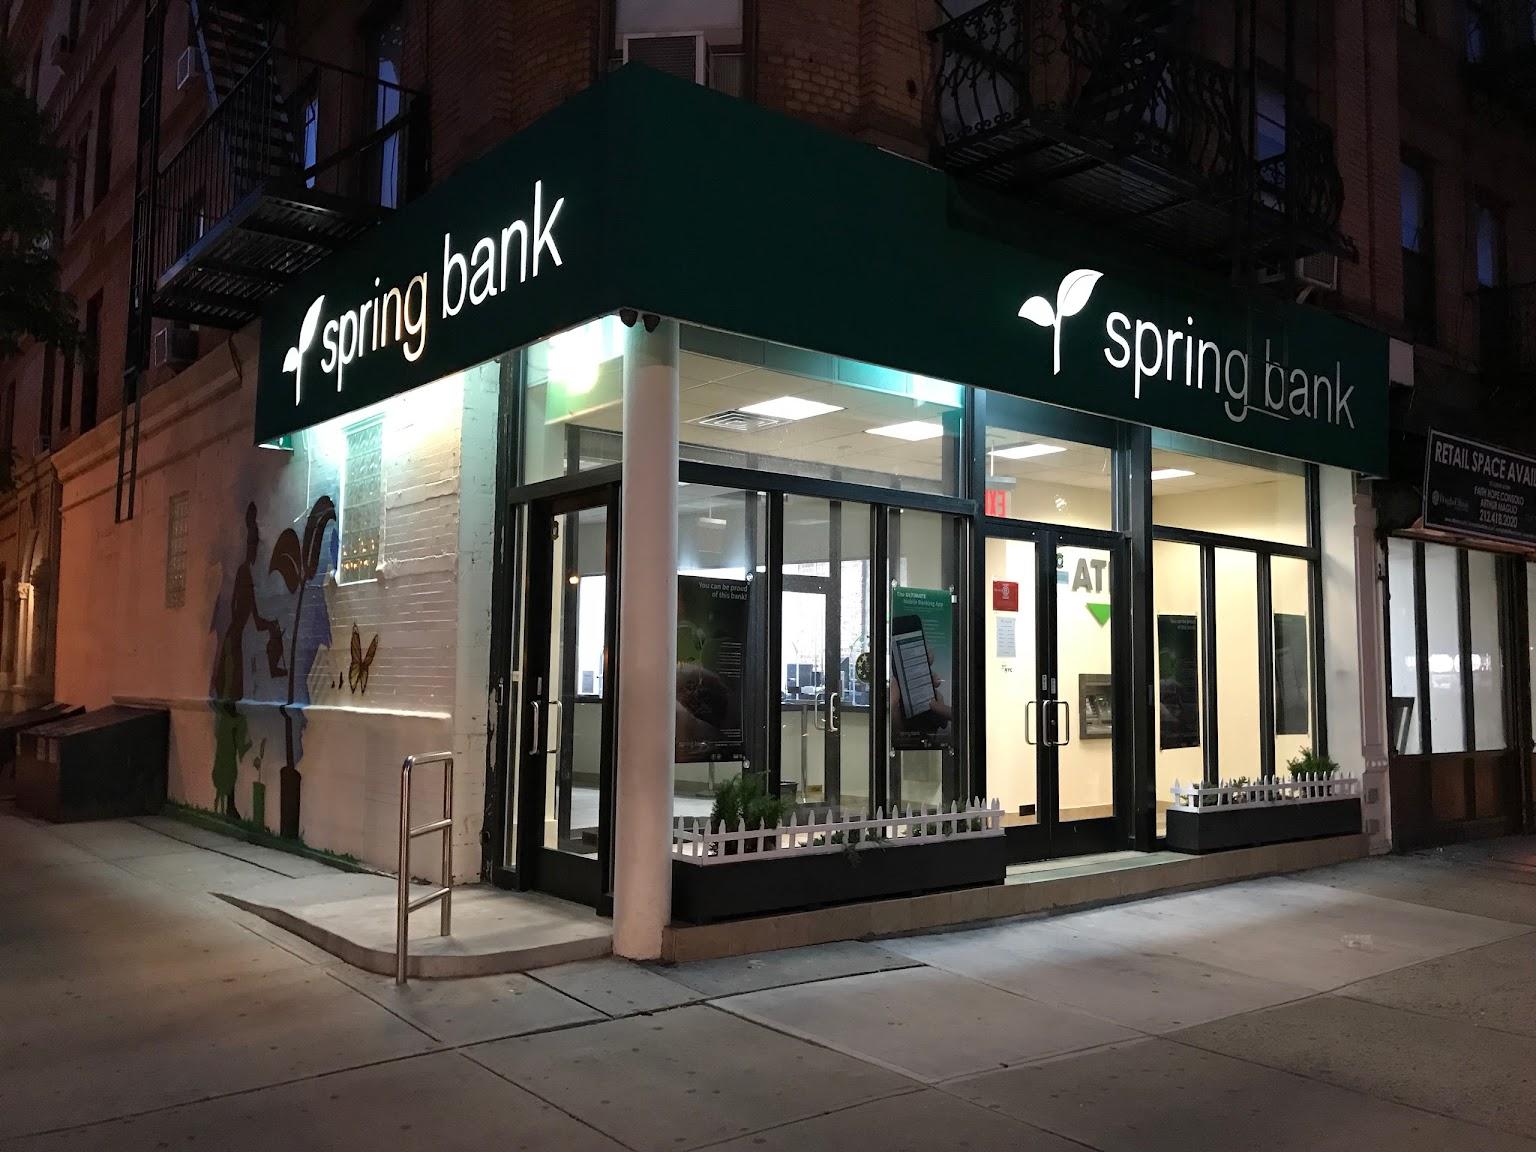 Spring bank. Frederic Douglas Blvd New York.